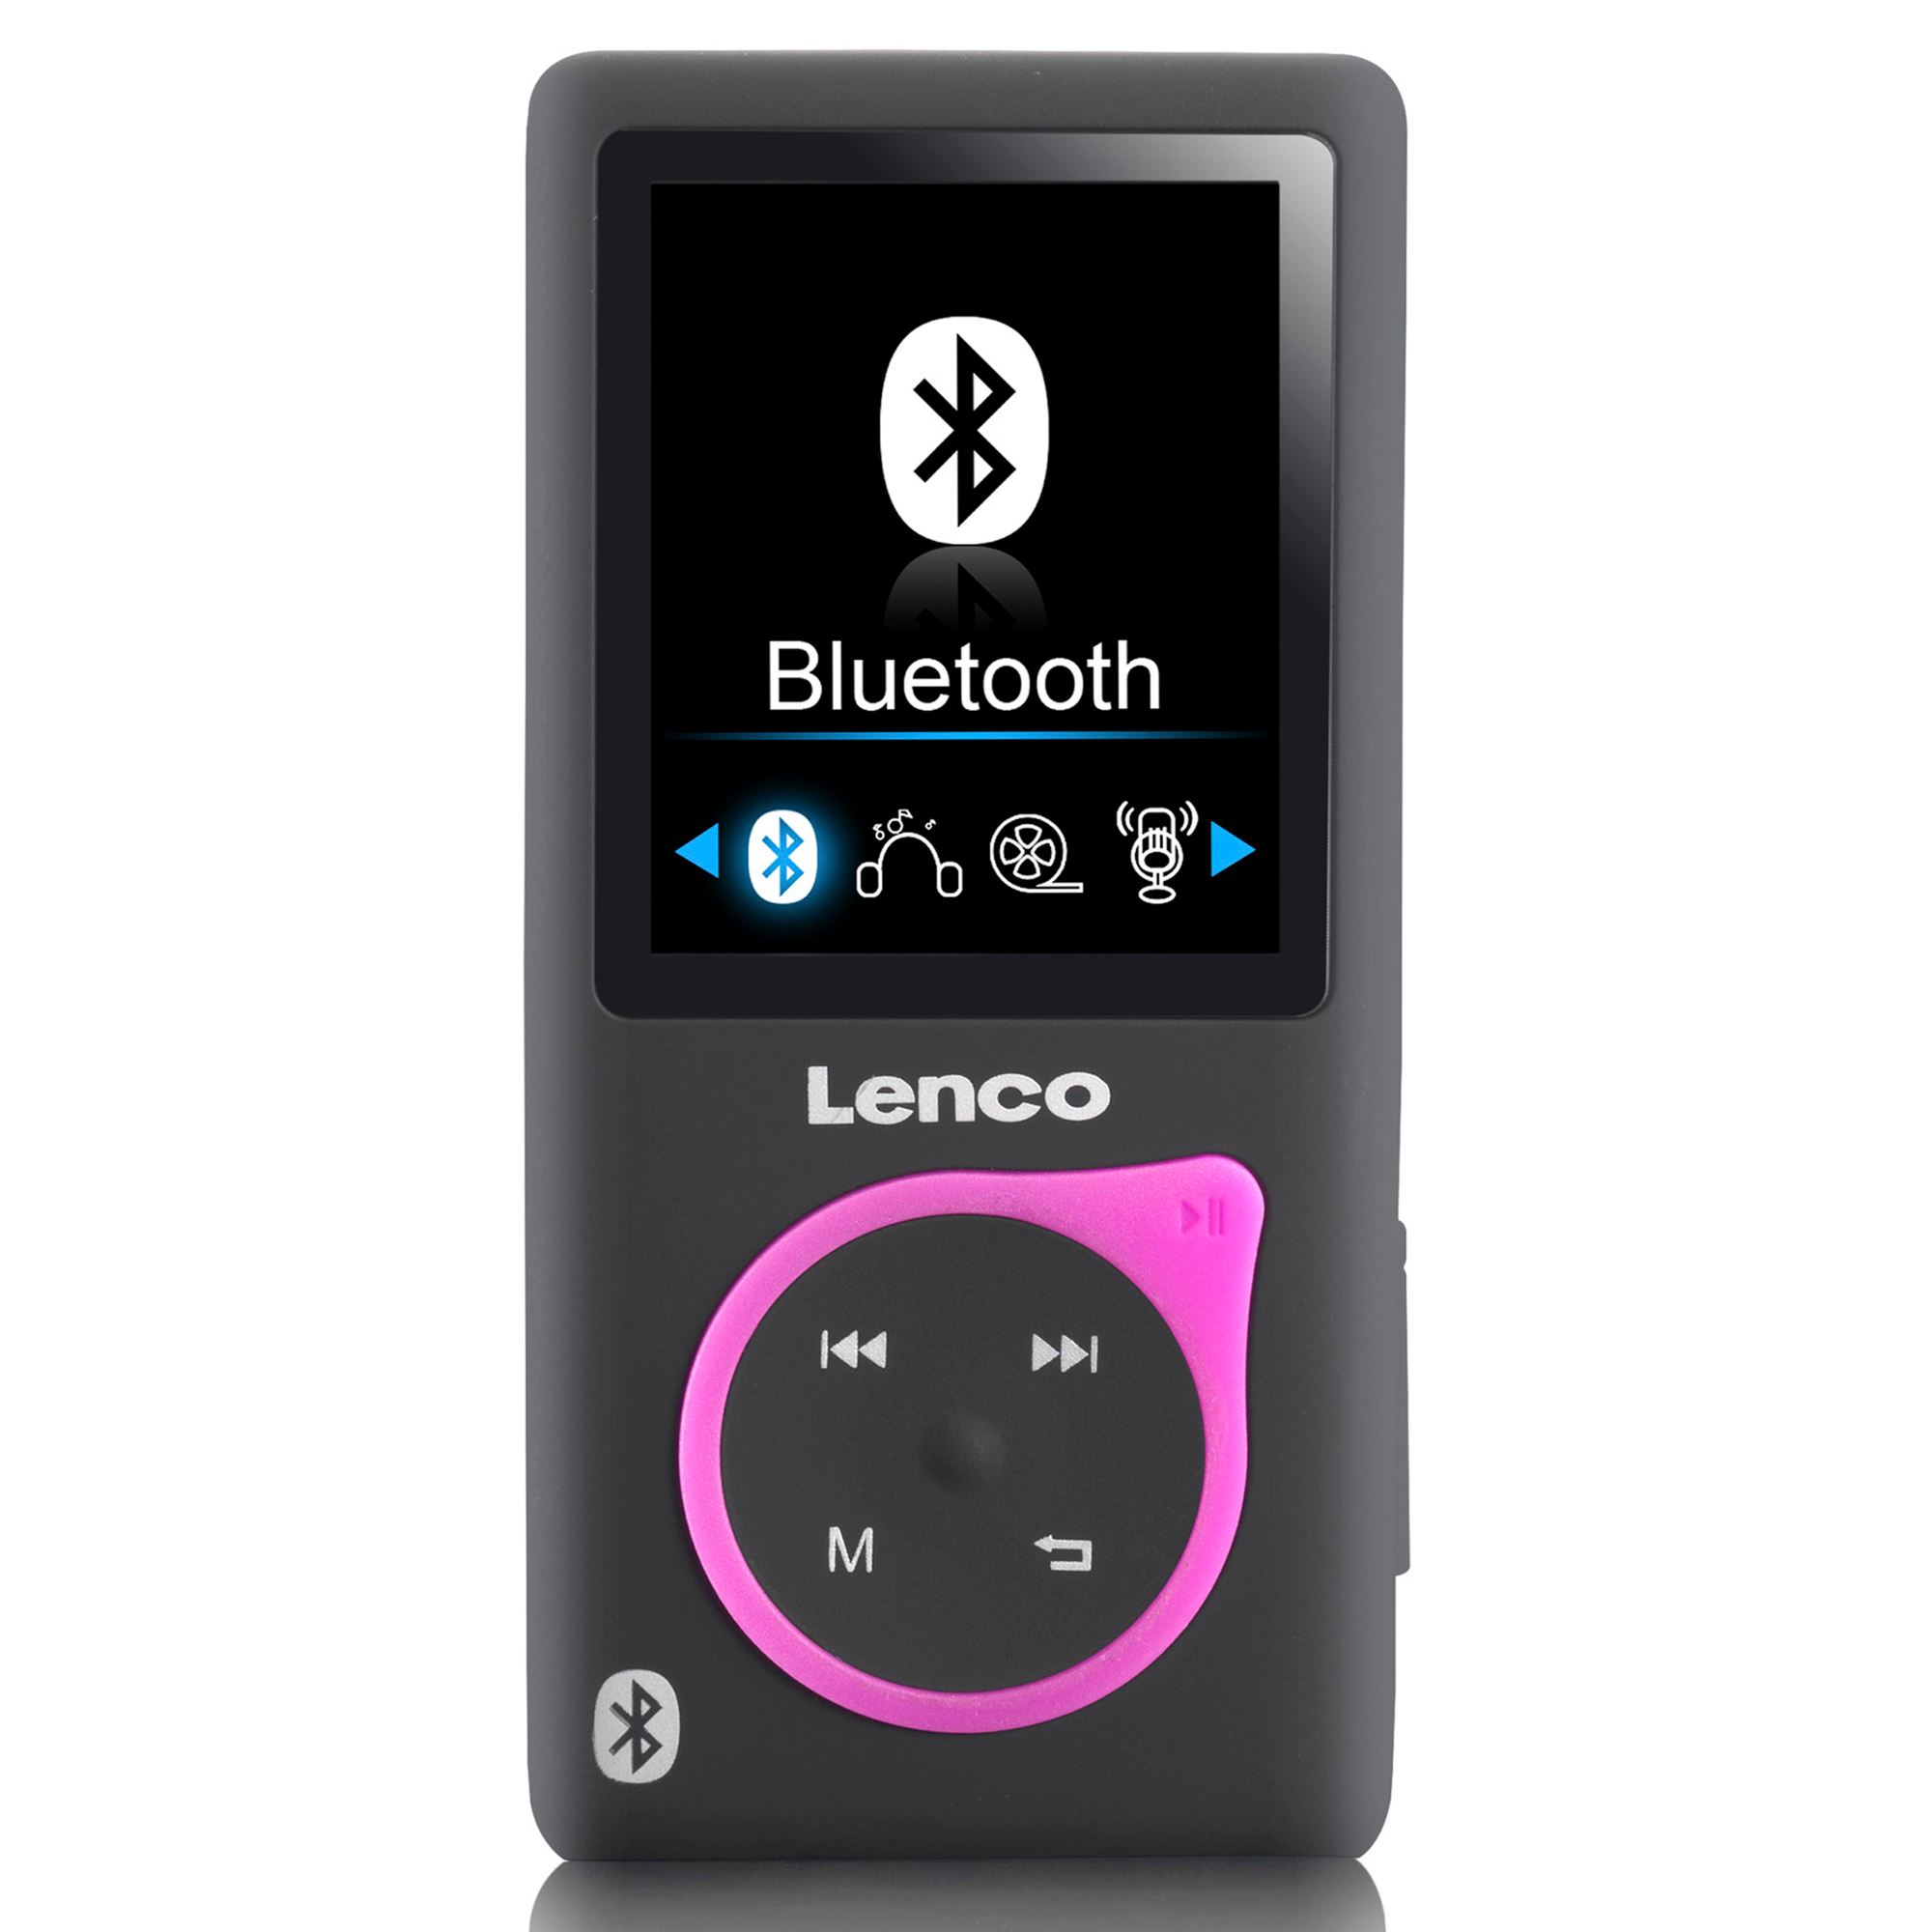 inkl. MP3 XEMIO-768 MP4 Player Pink Micro-SD-Karte Schwarz-Pink Bluetooth - 8GB - - 8 LENCO Player GB,